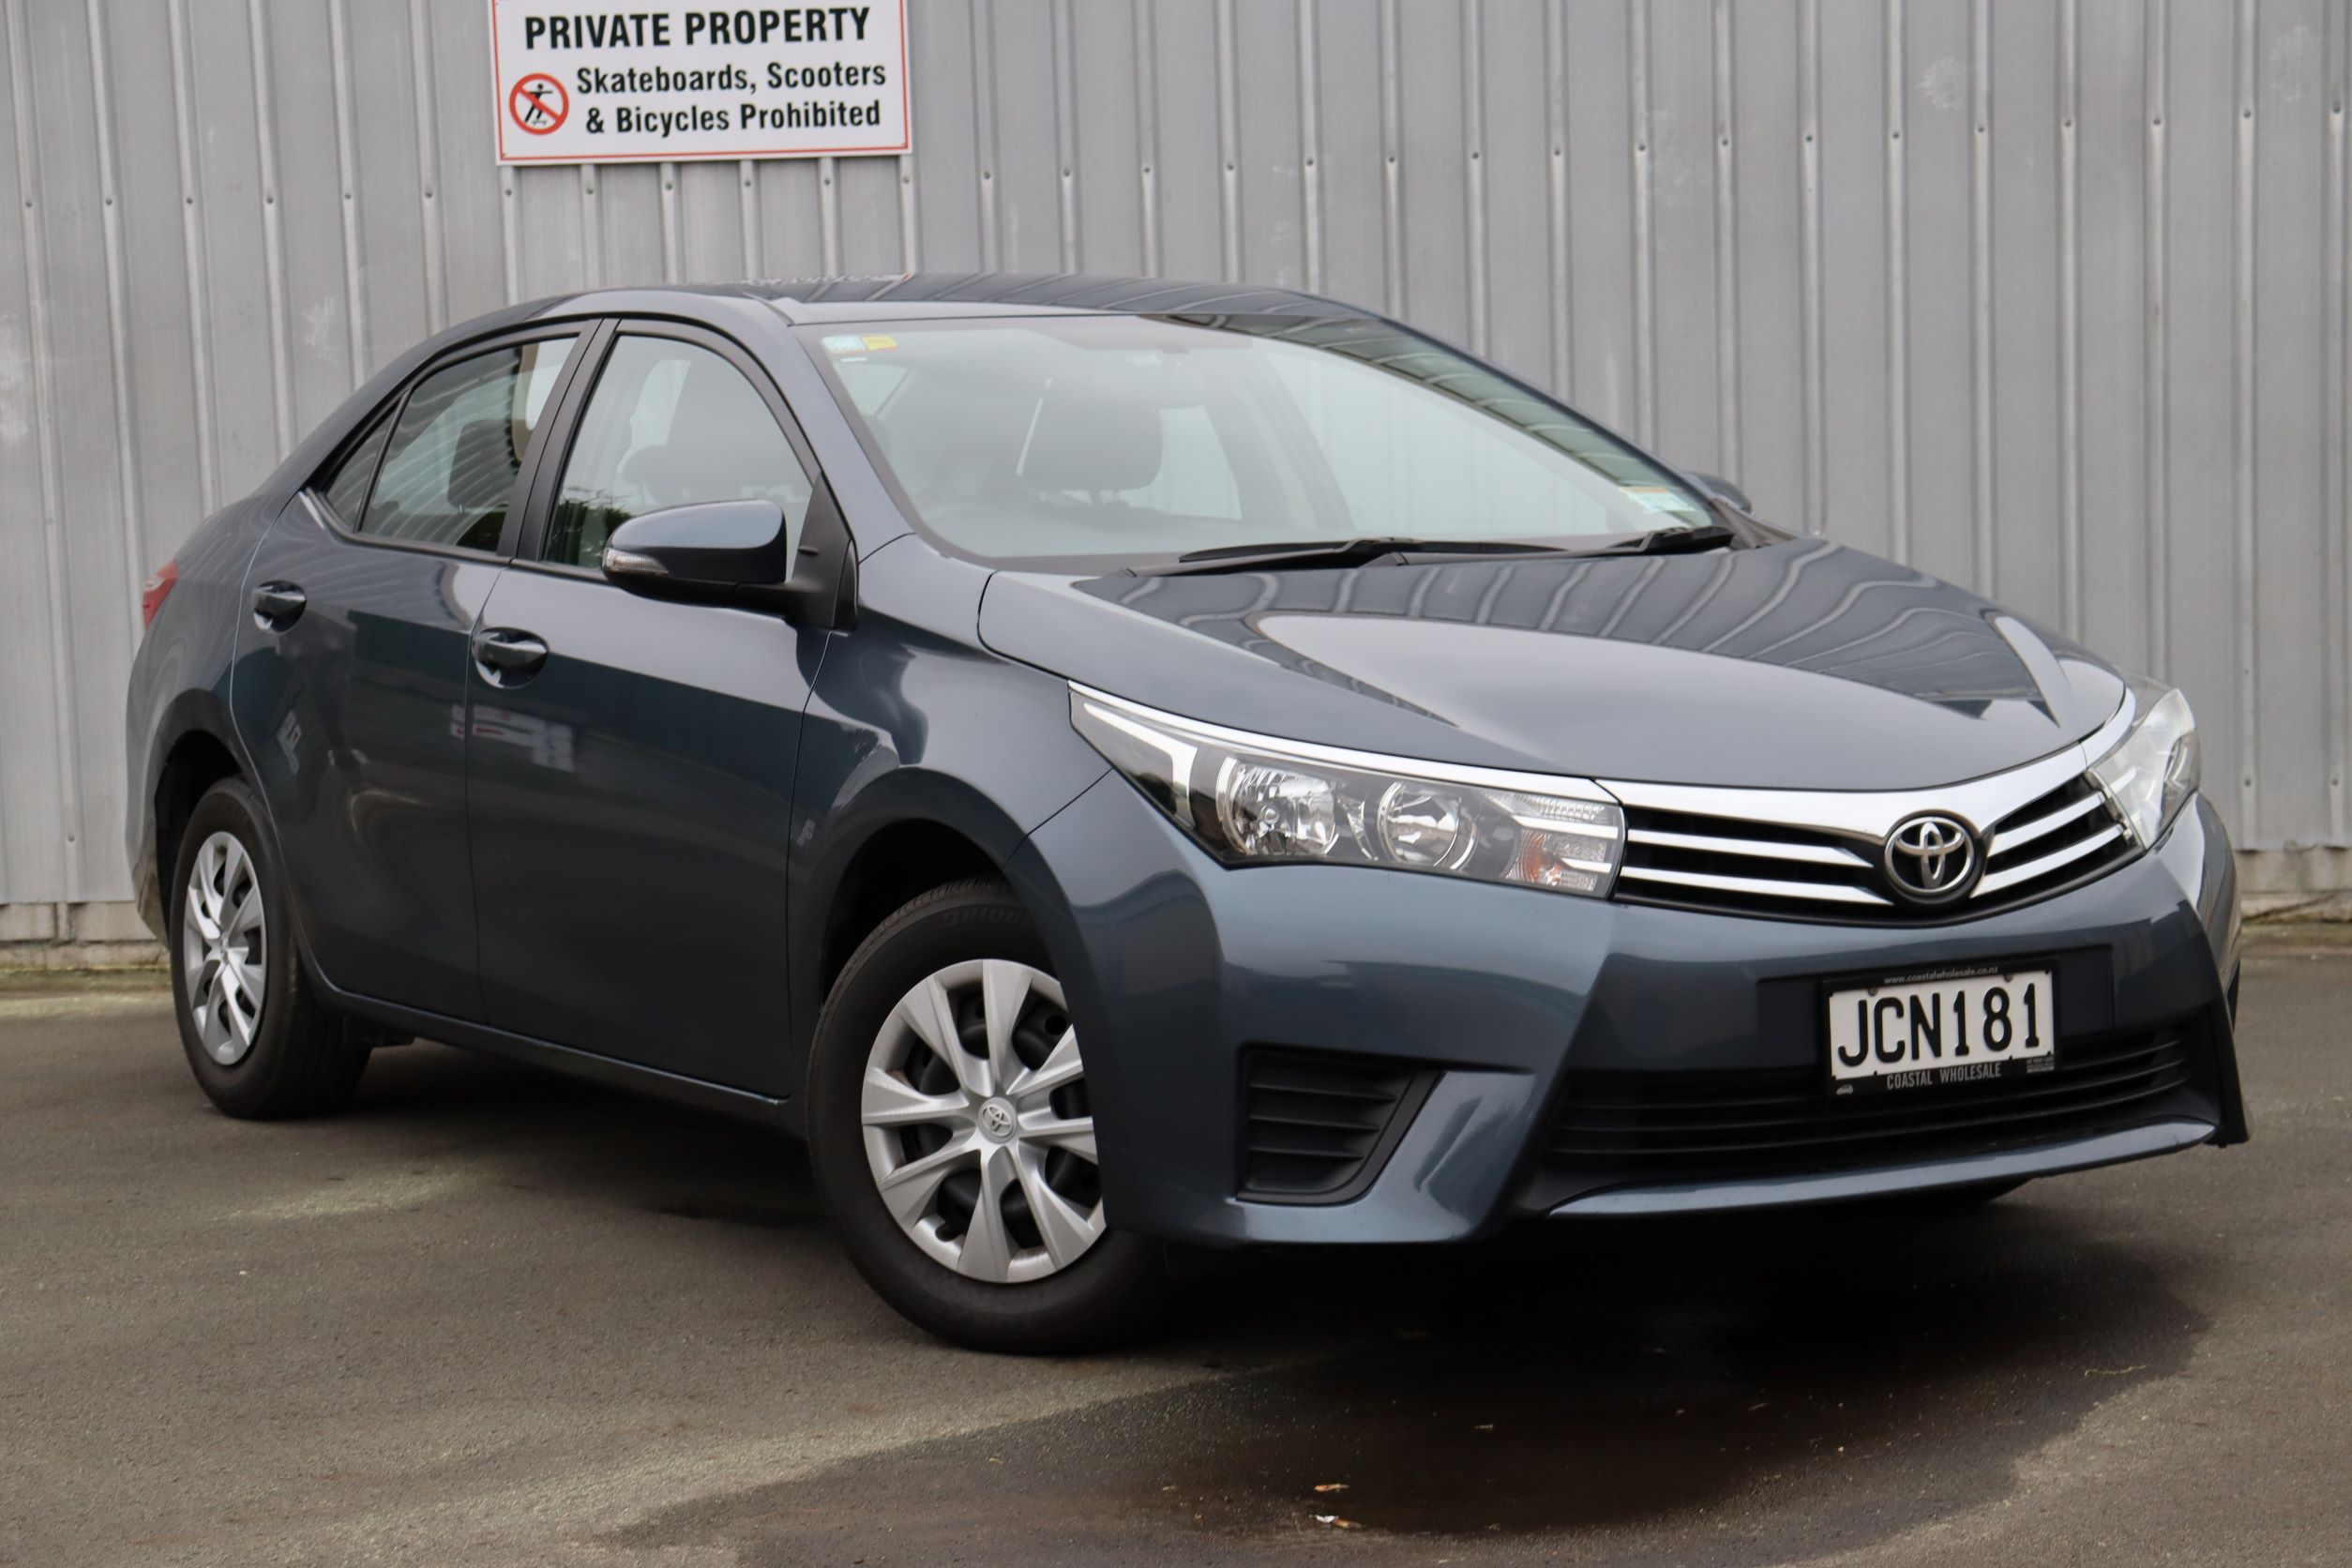 Toyota Corolla sedan 2015 for sale in Auckland